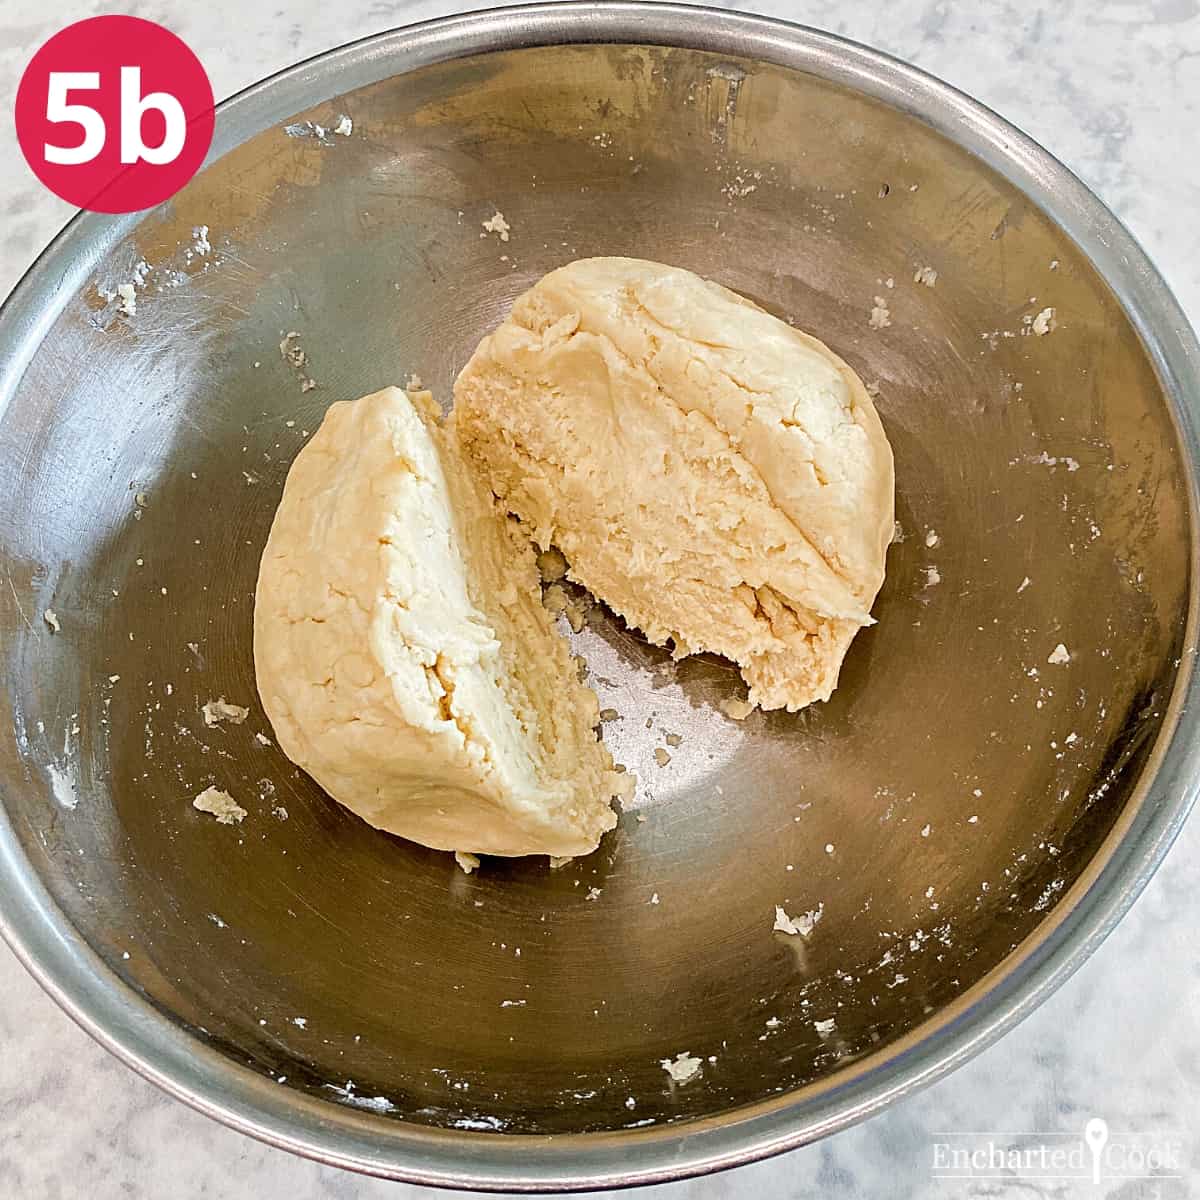 Homemade Pie Crust Photo Process Photo Step 5b.